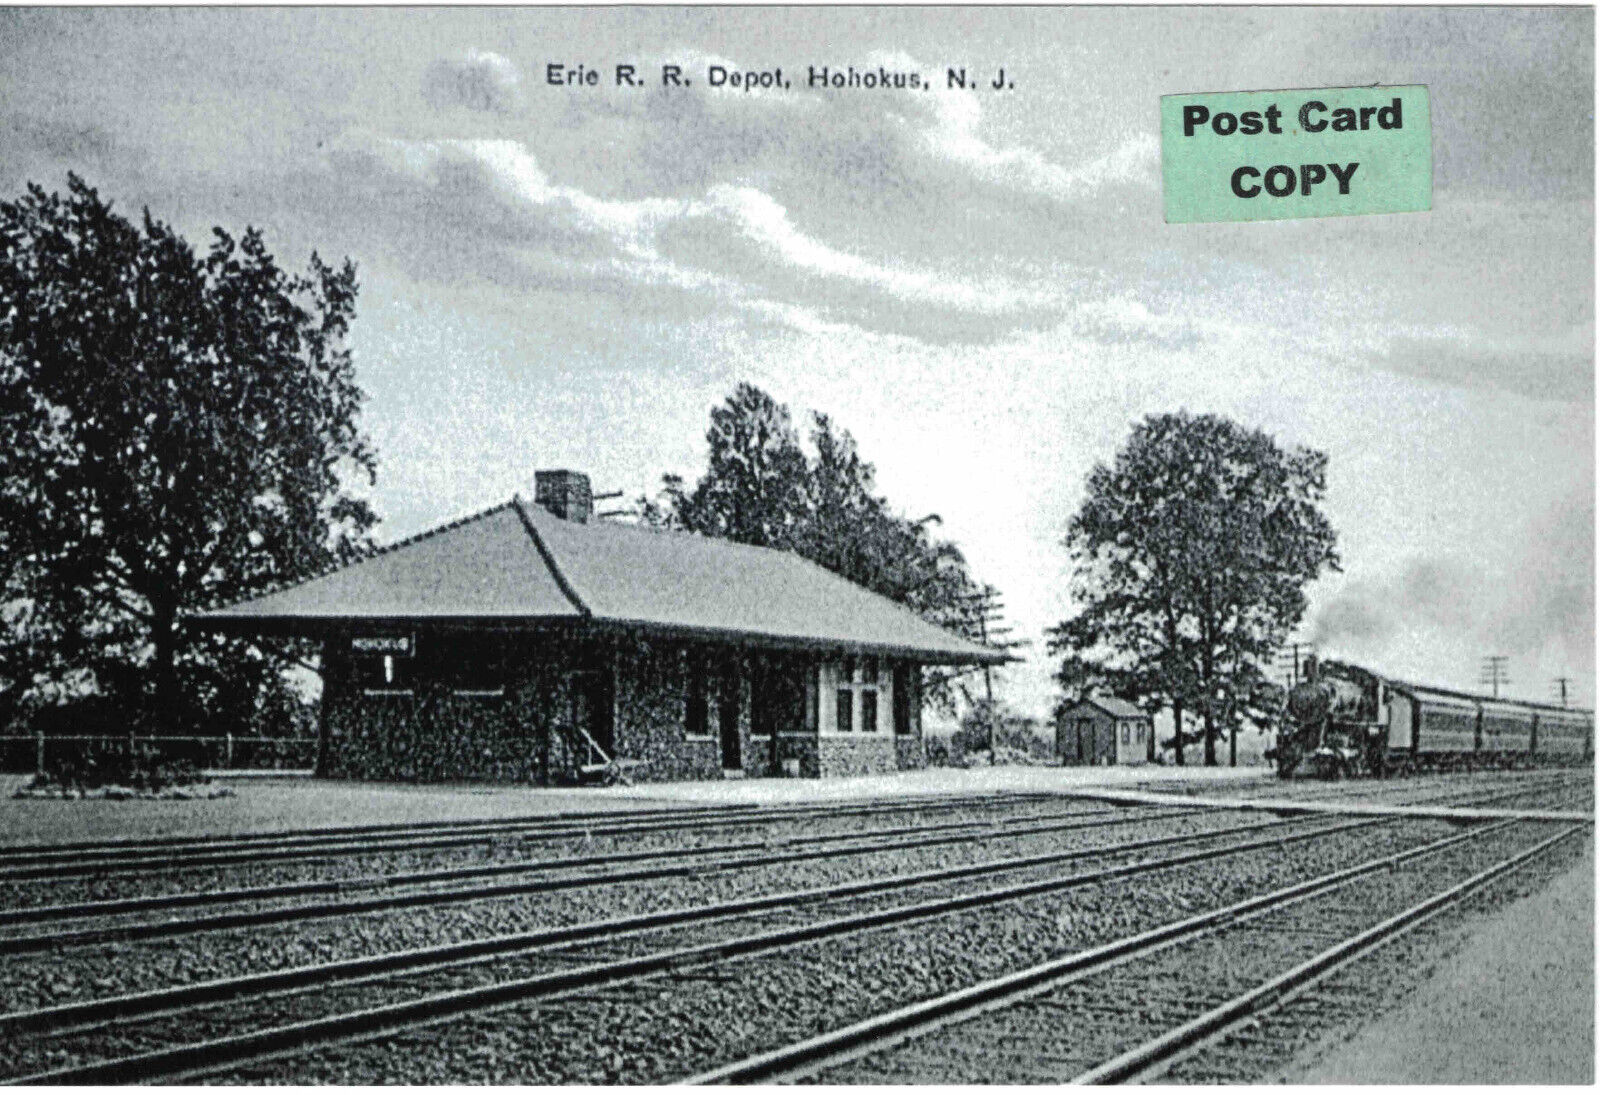 Erie Railroad Depot (station) & passenger train  at Hohokus, Bergen Co., NJ